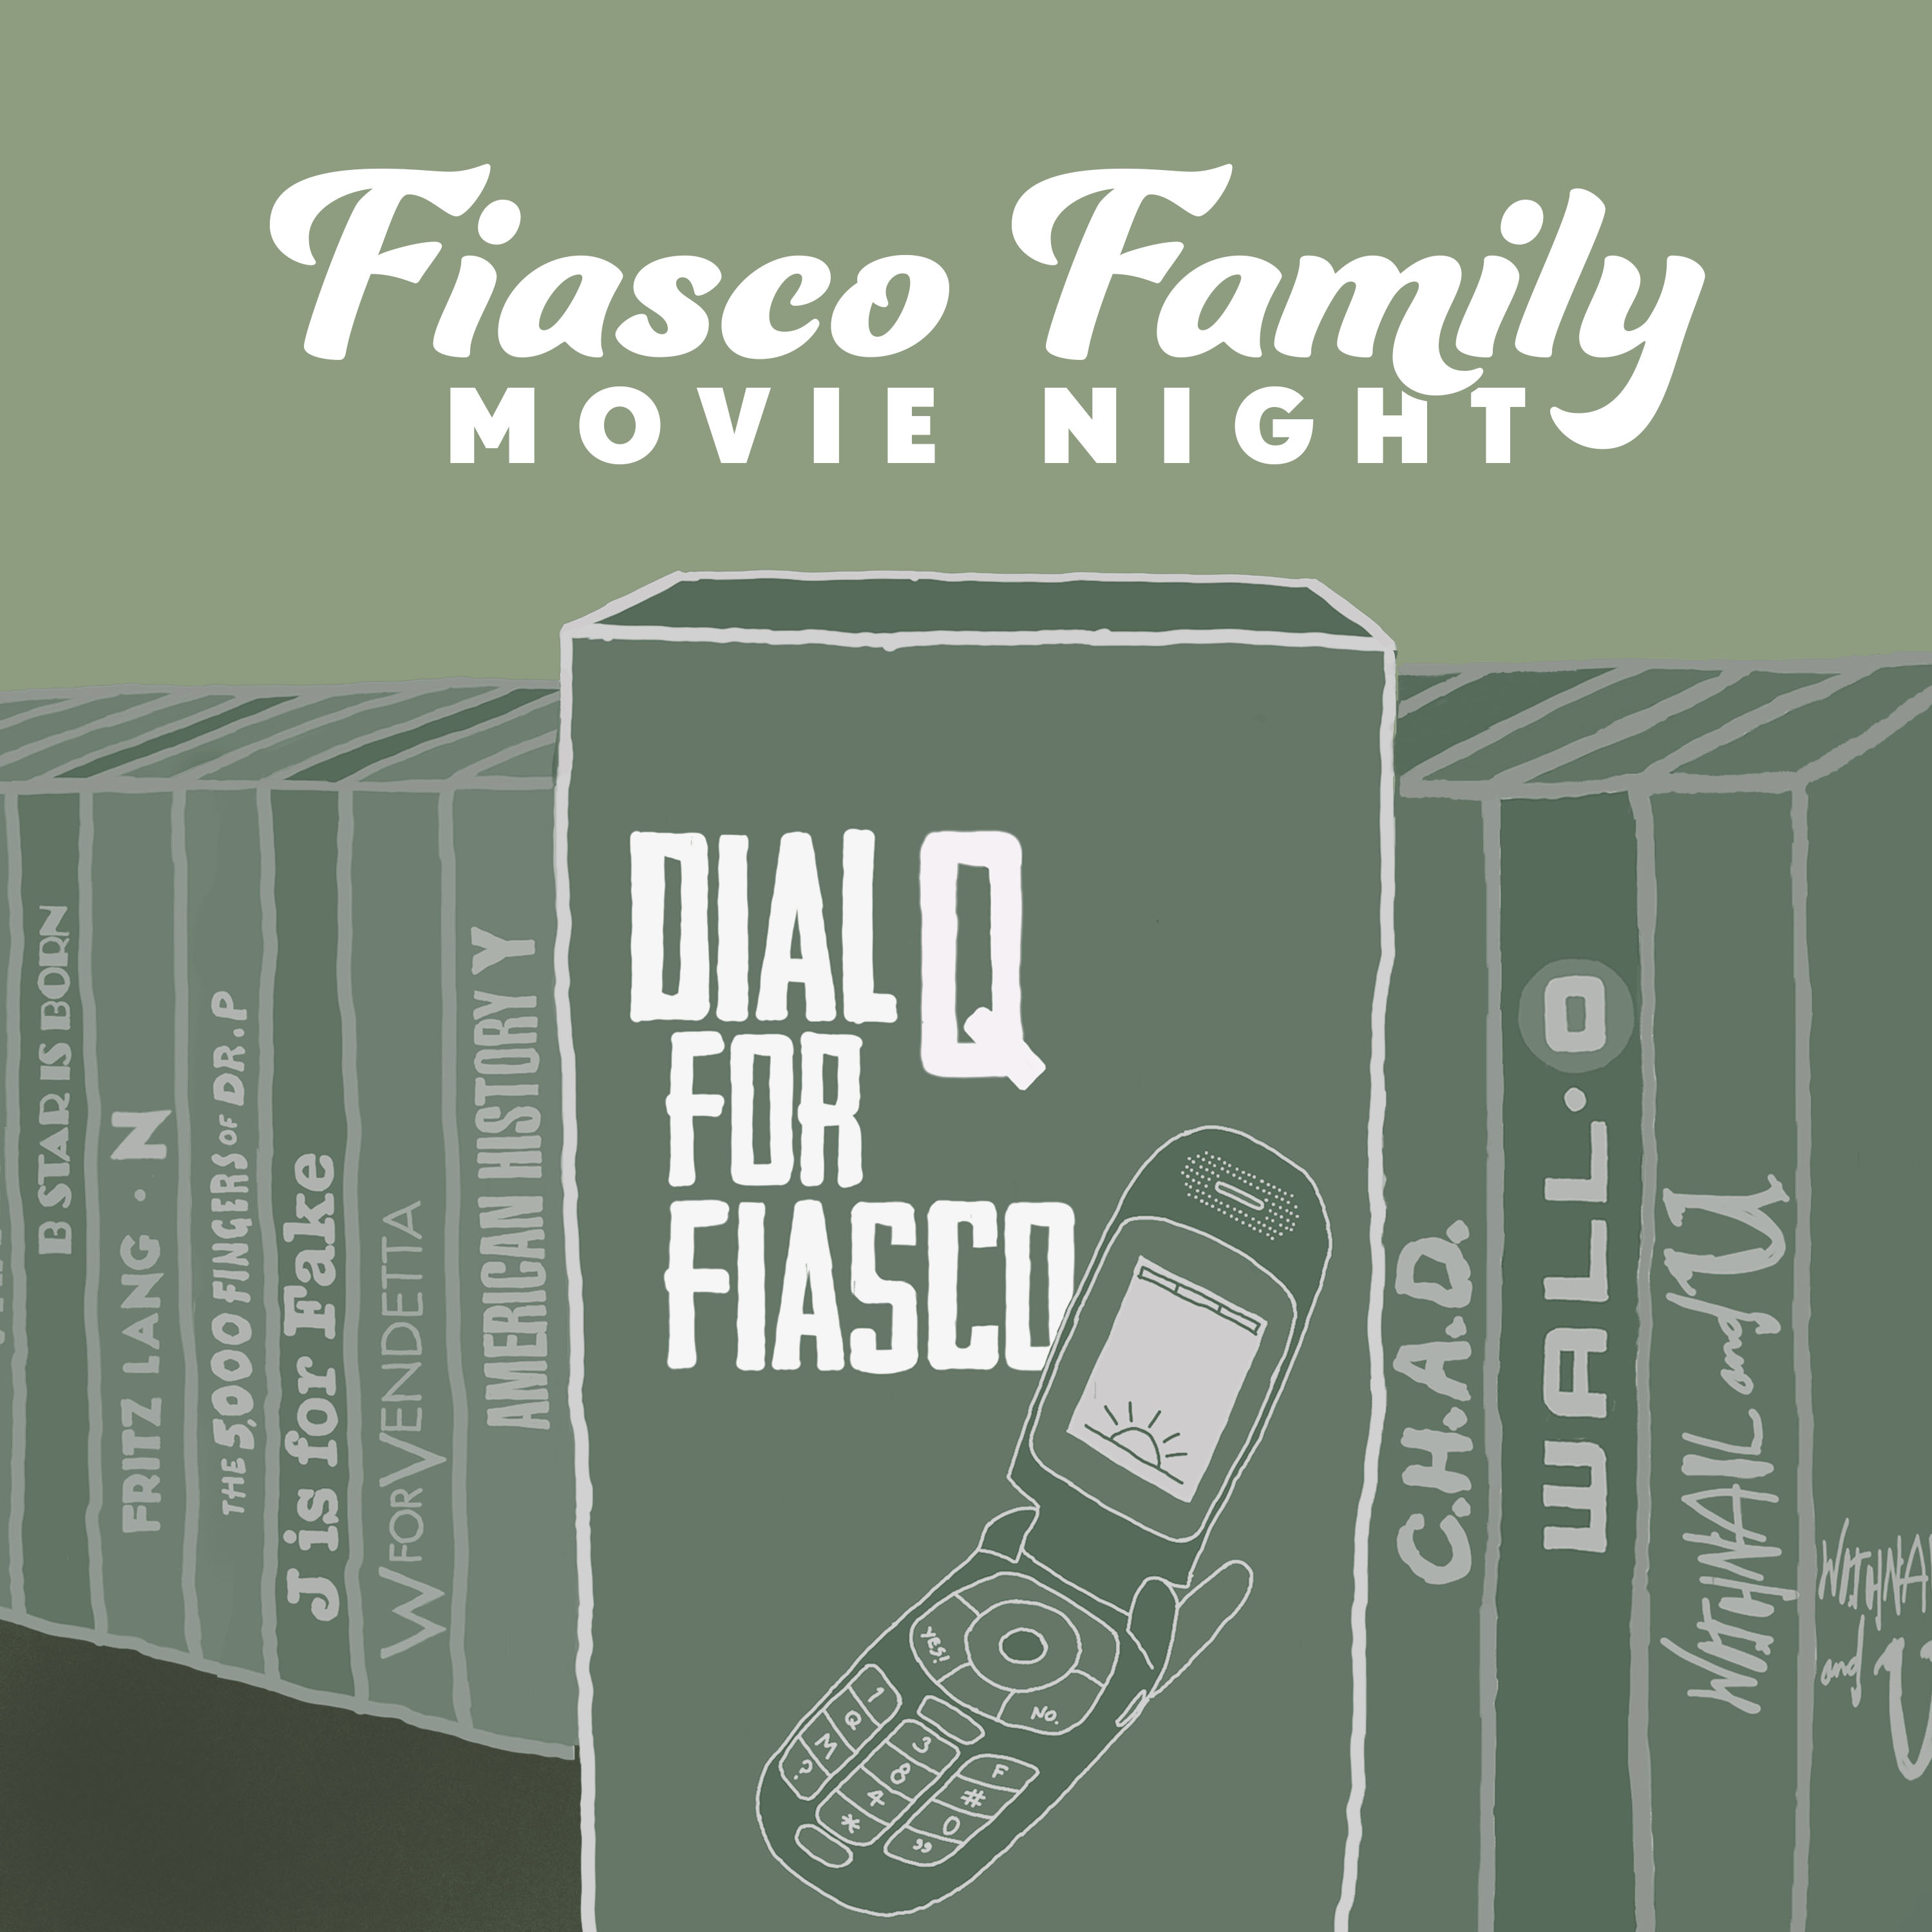 Fiasco Family Movie Night